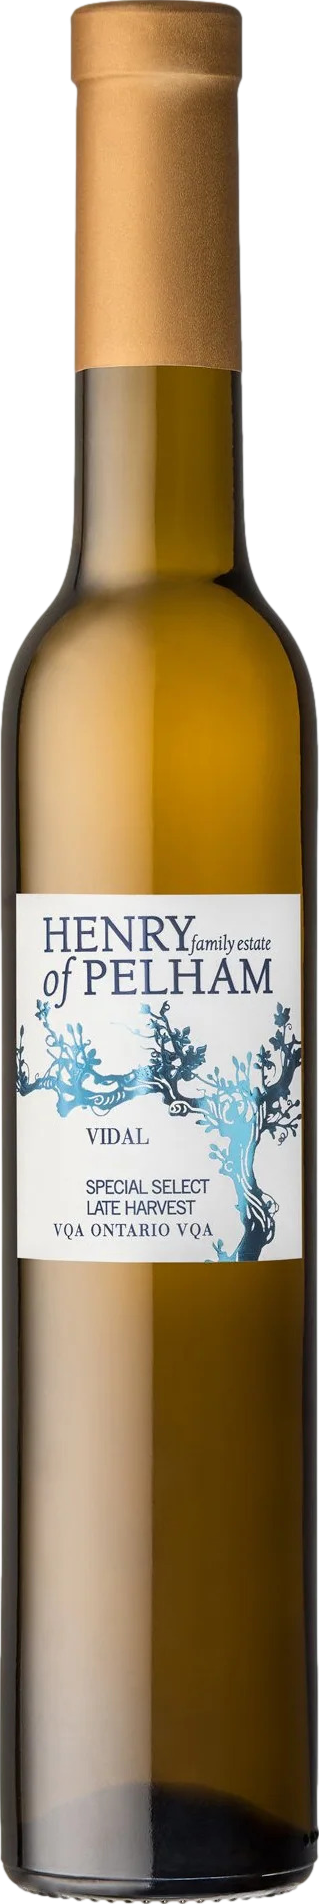 Henry of Pelham Special Select Late Harvest Vidal 2019